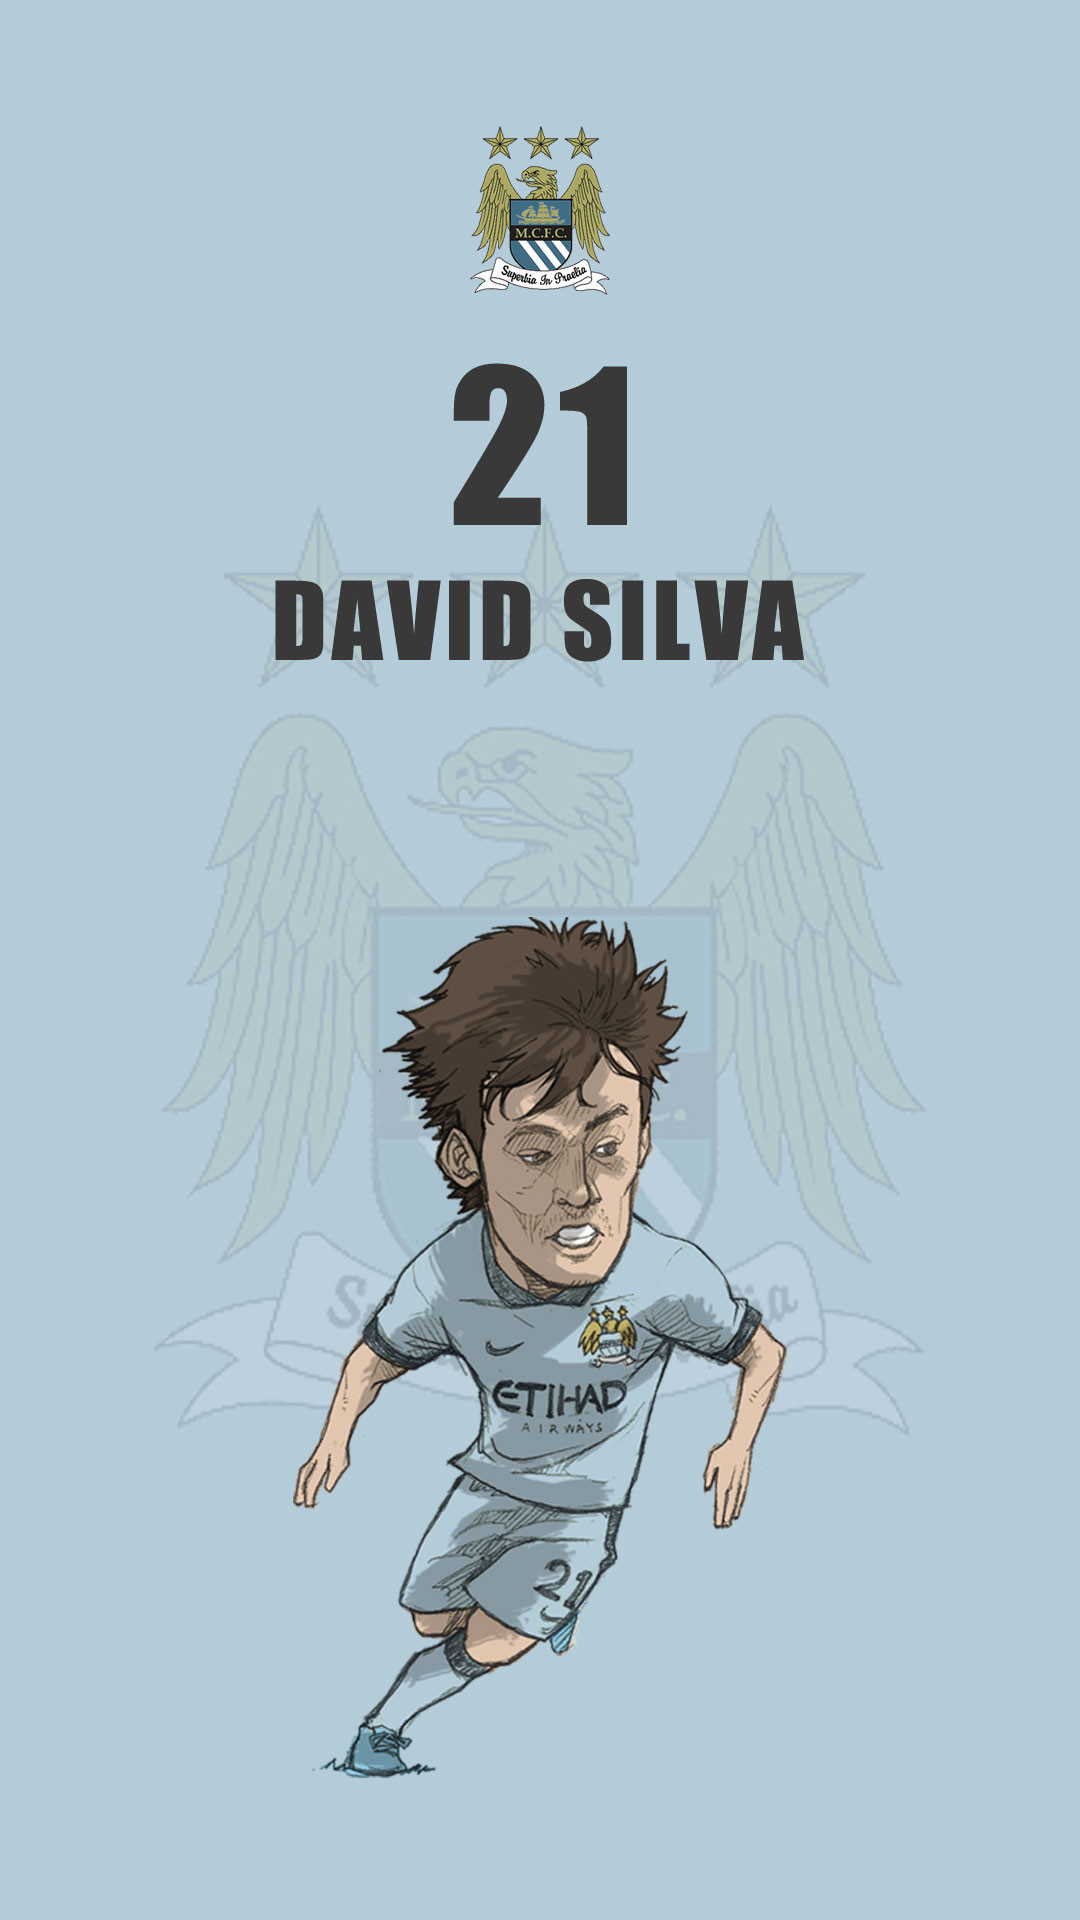 1080x1920 Manchester city fan art mobile wallpaper "David Silva"